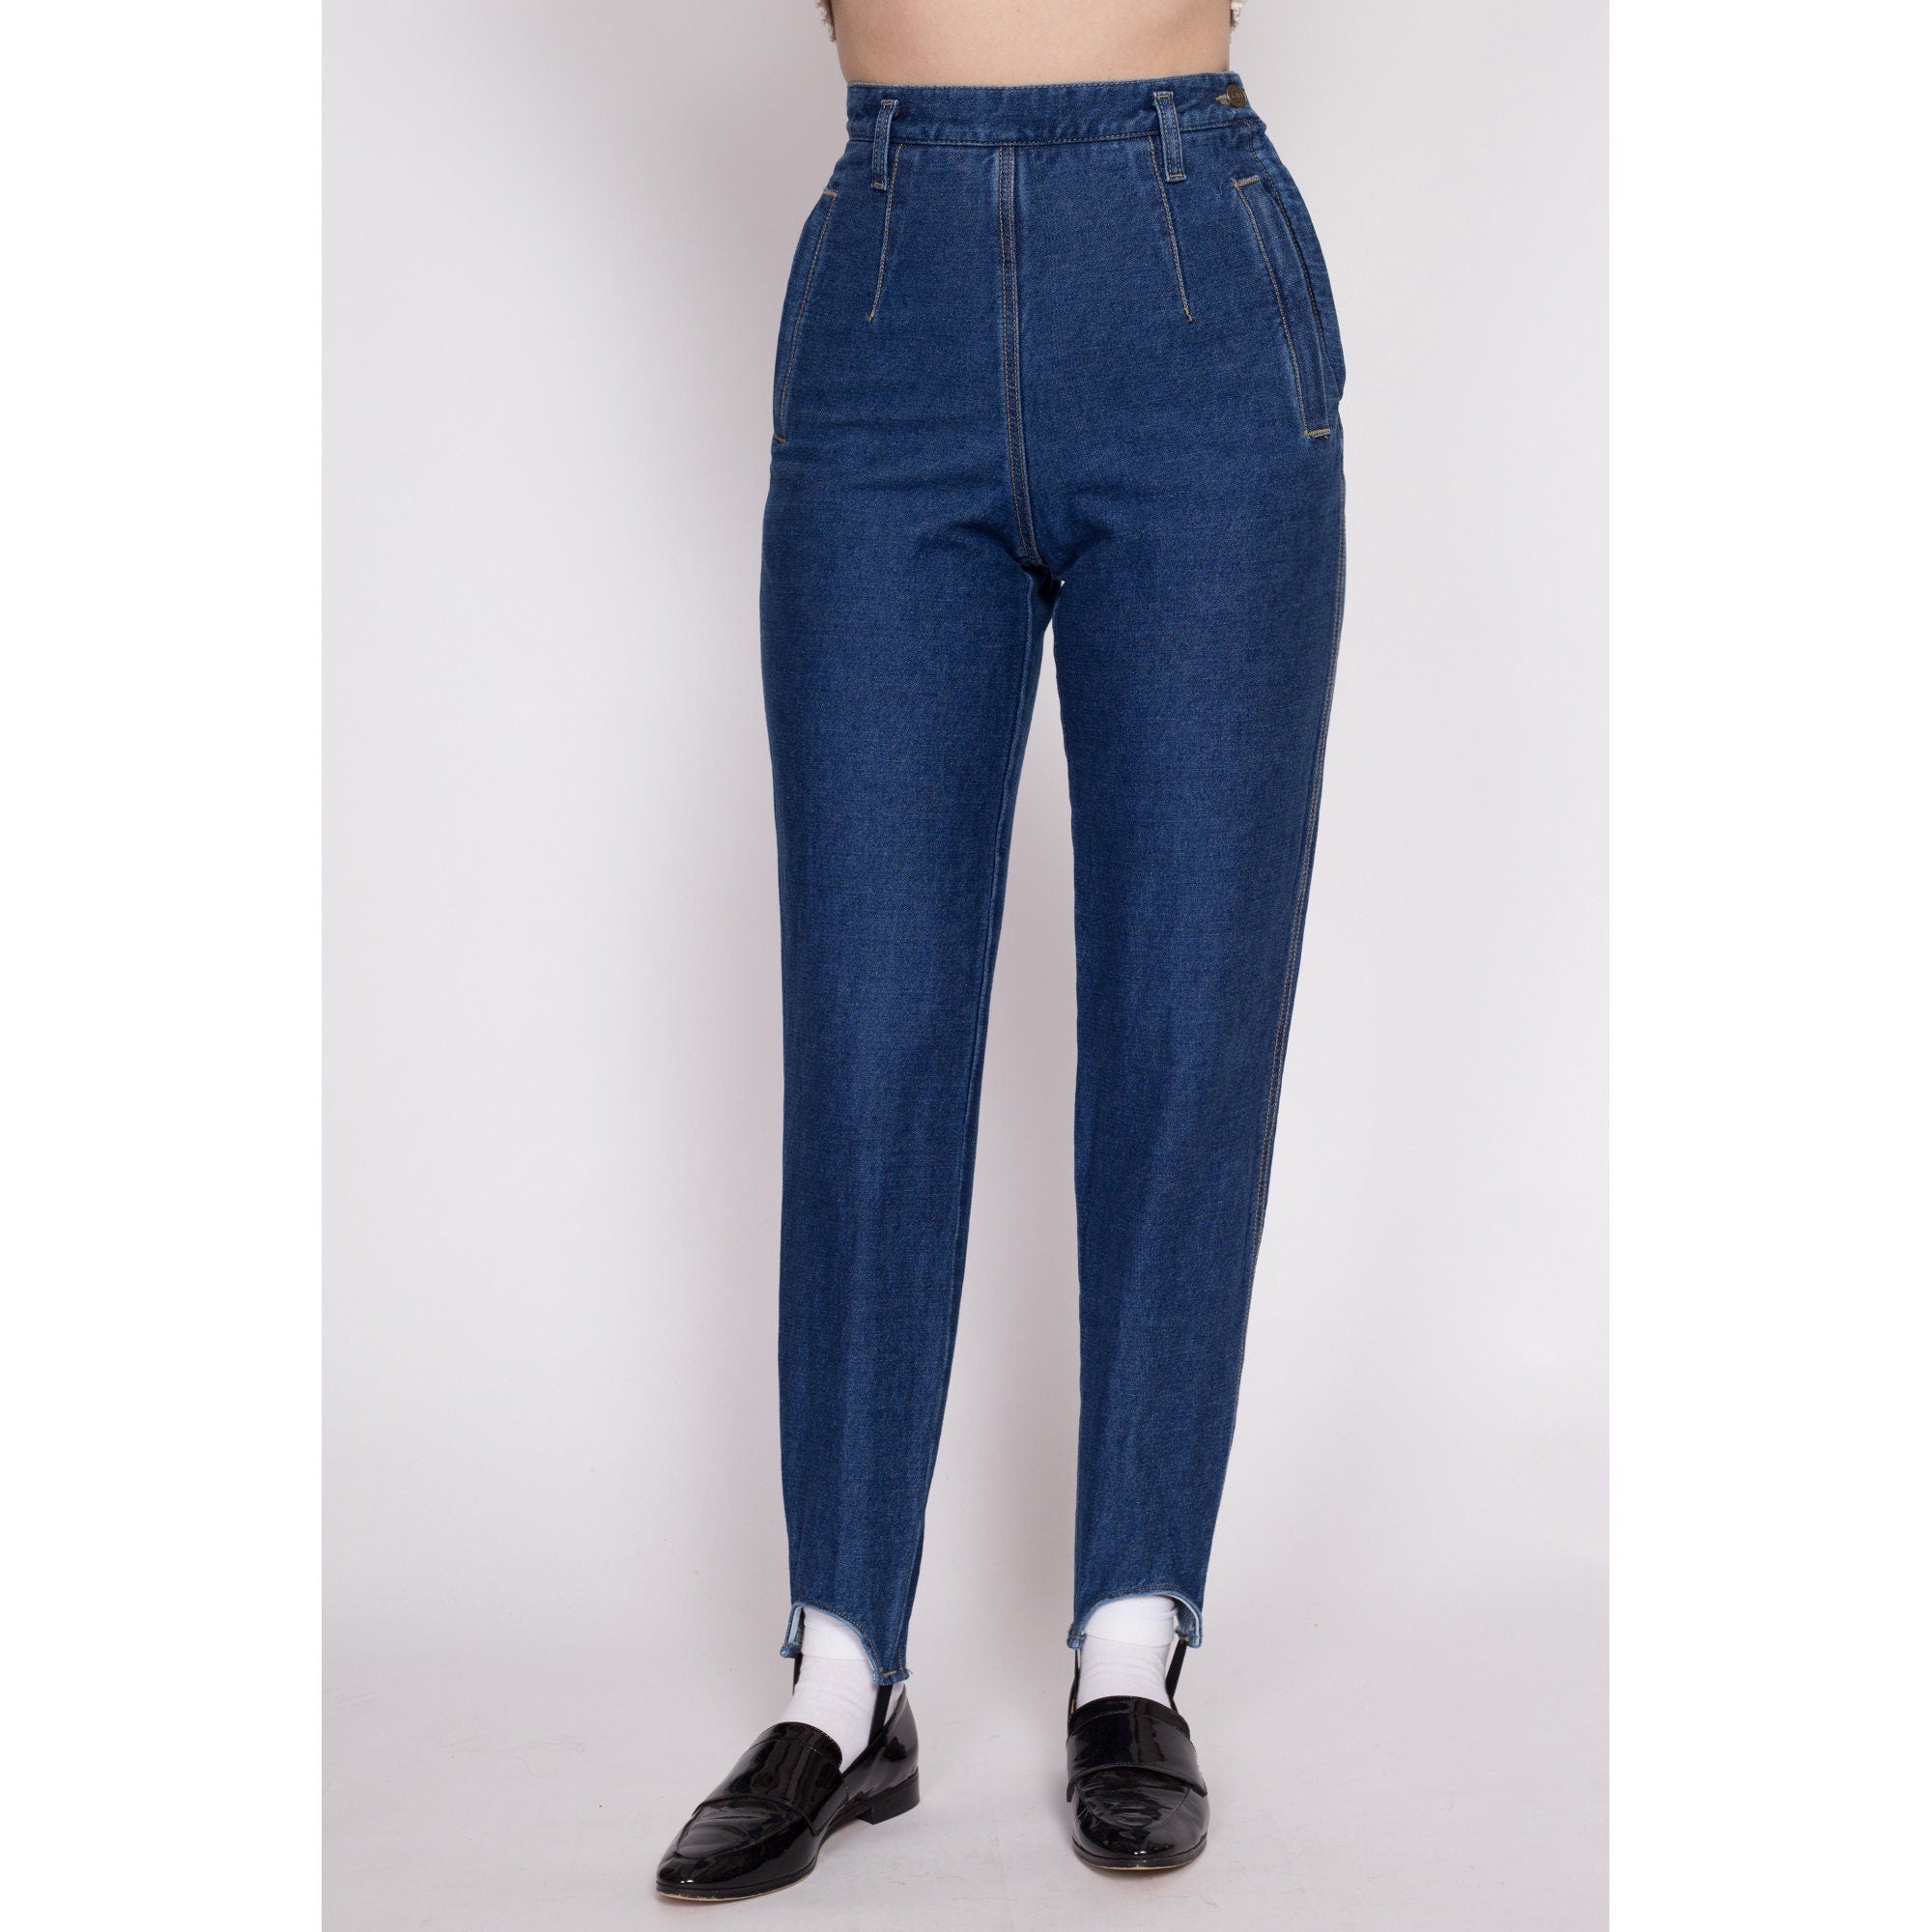 90s Lizwear Stirrup Side Zip Jeans - Extra Small, 25